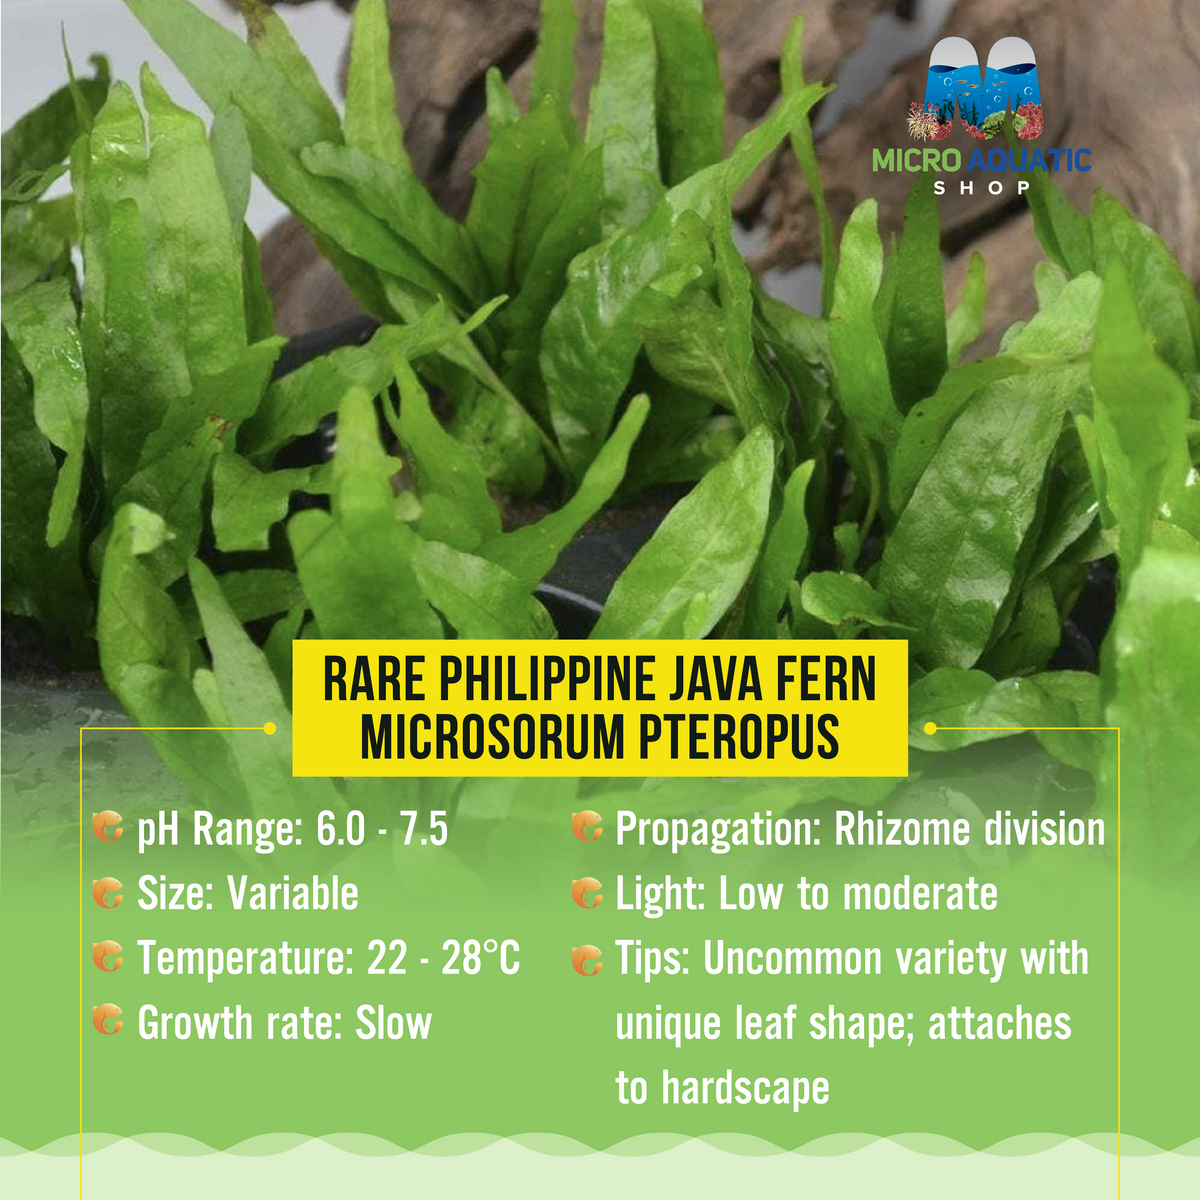 Rare Philippine Java fern - Microsorum pteropus